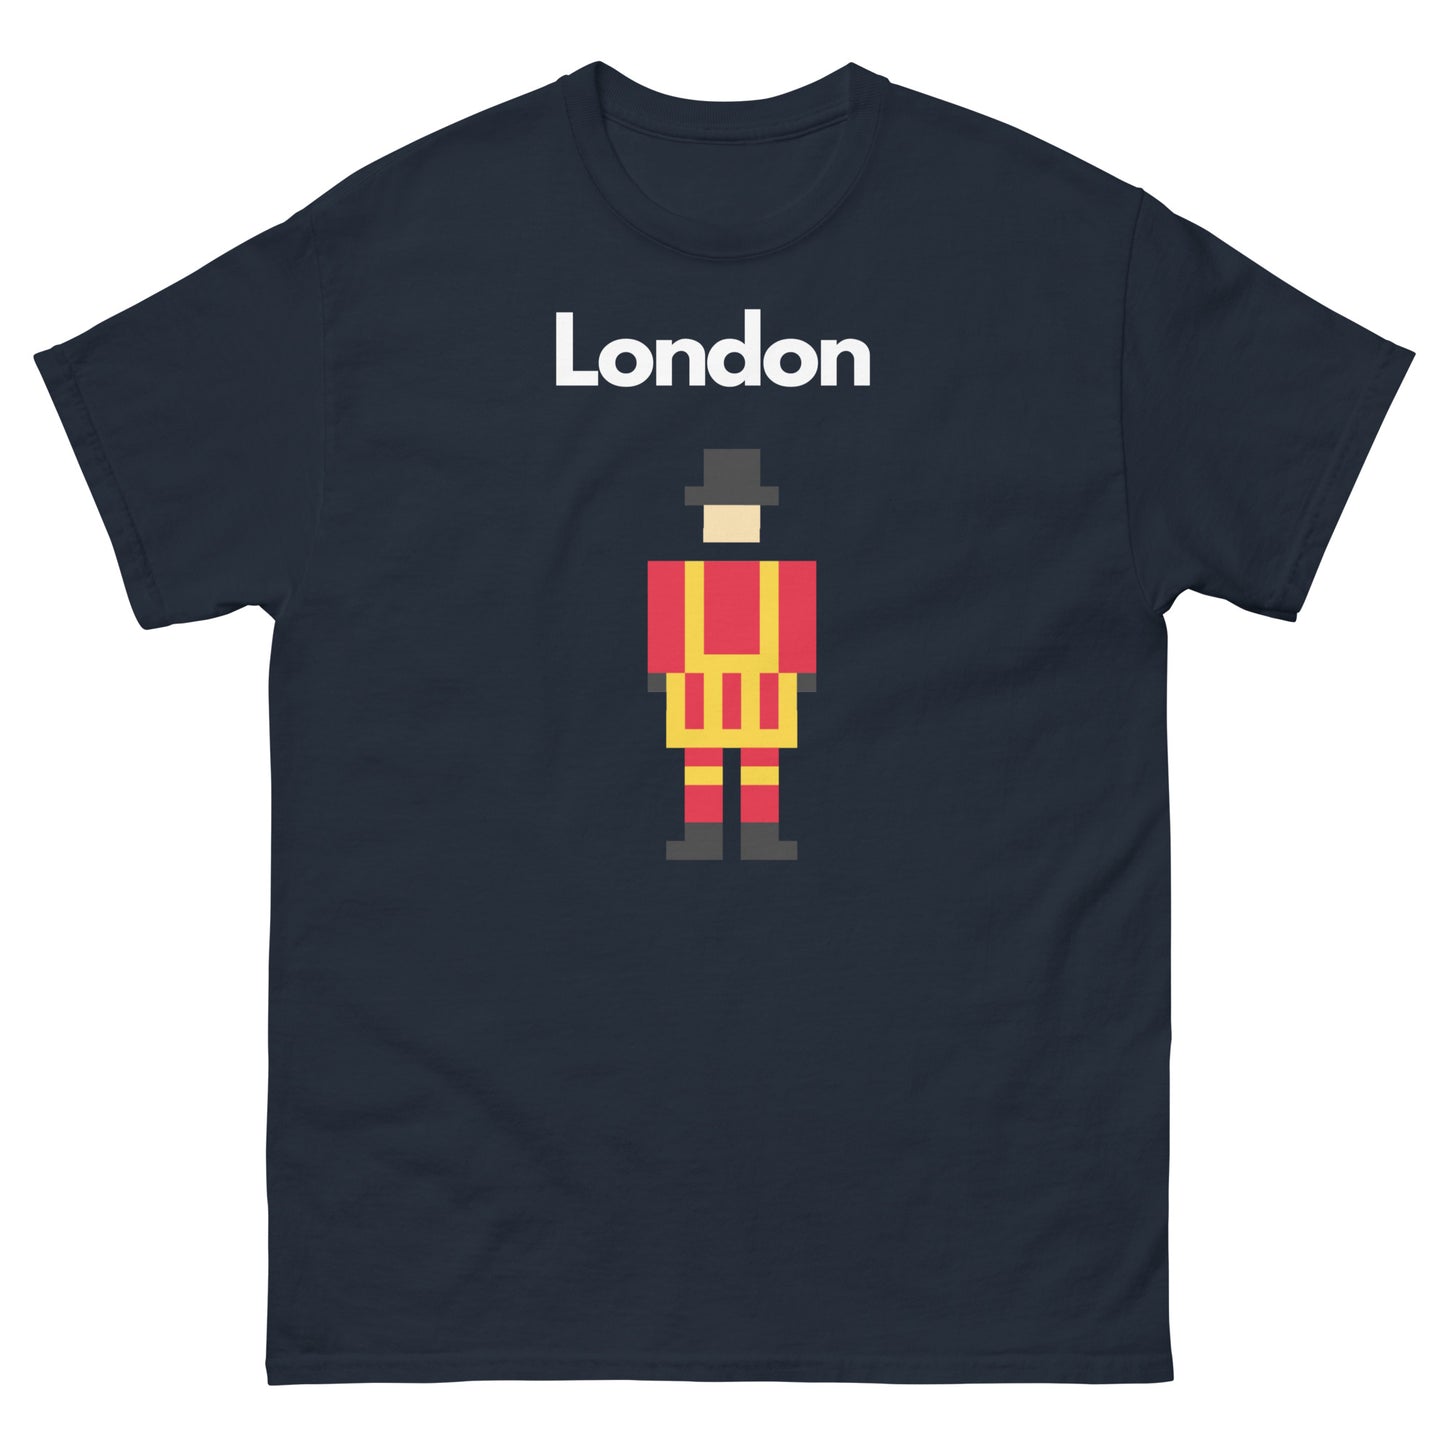 London Royal Guard Aka Beefeater - Men's classic tee